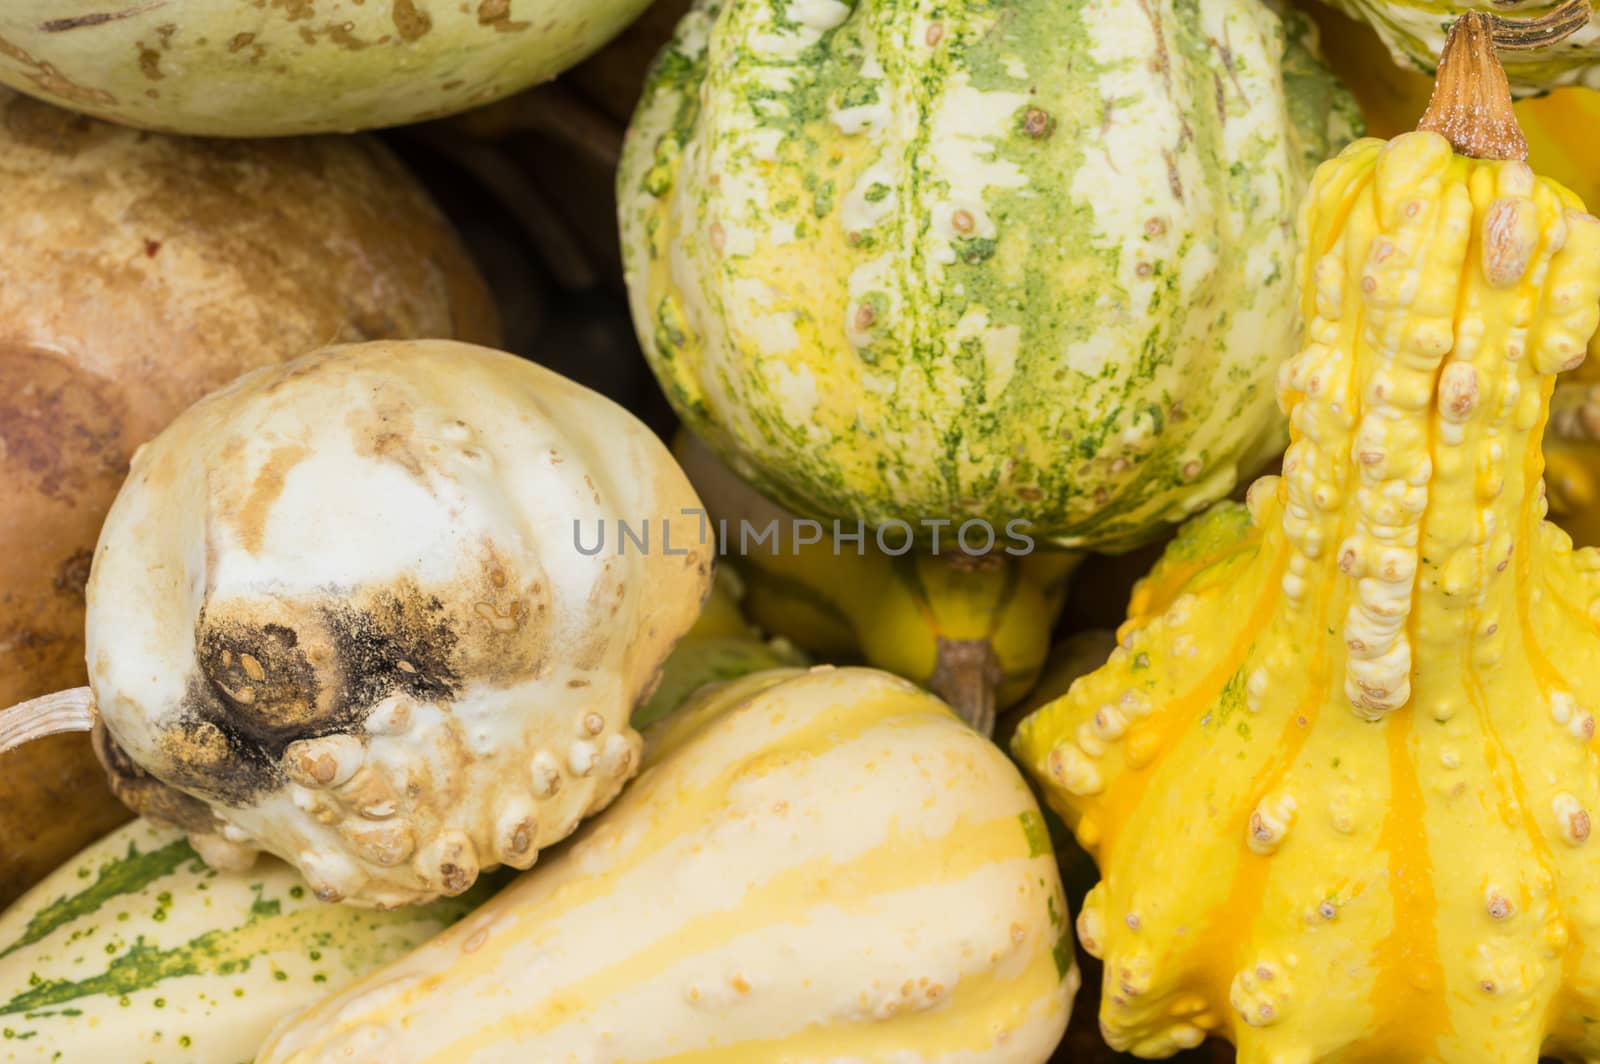 Still life with different decorative pumpkins, close-up